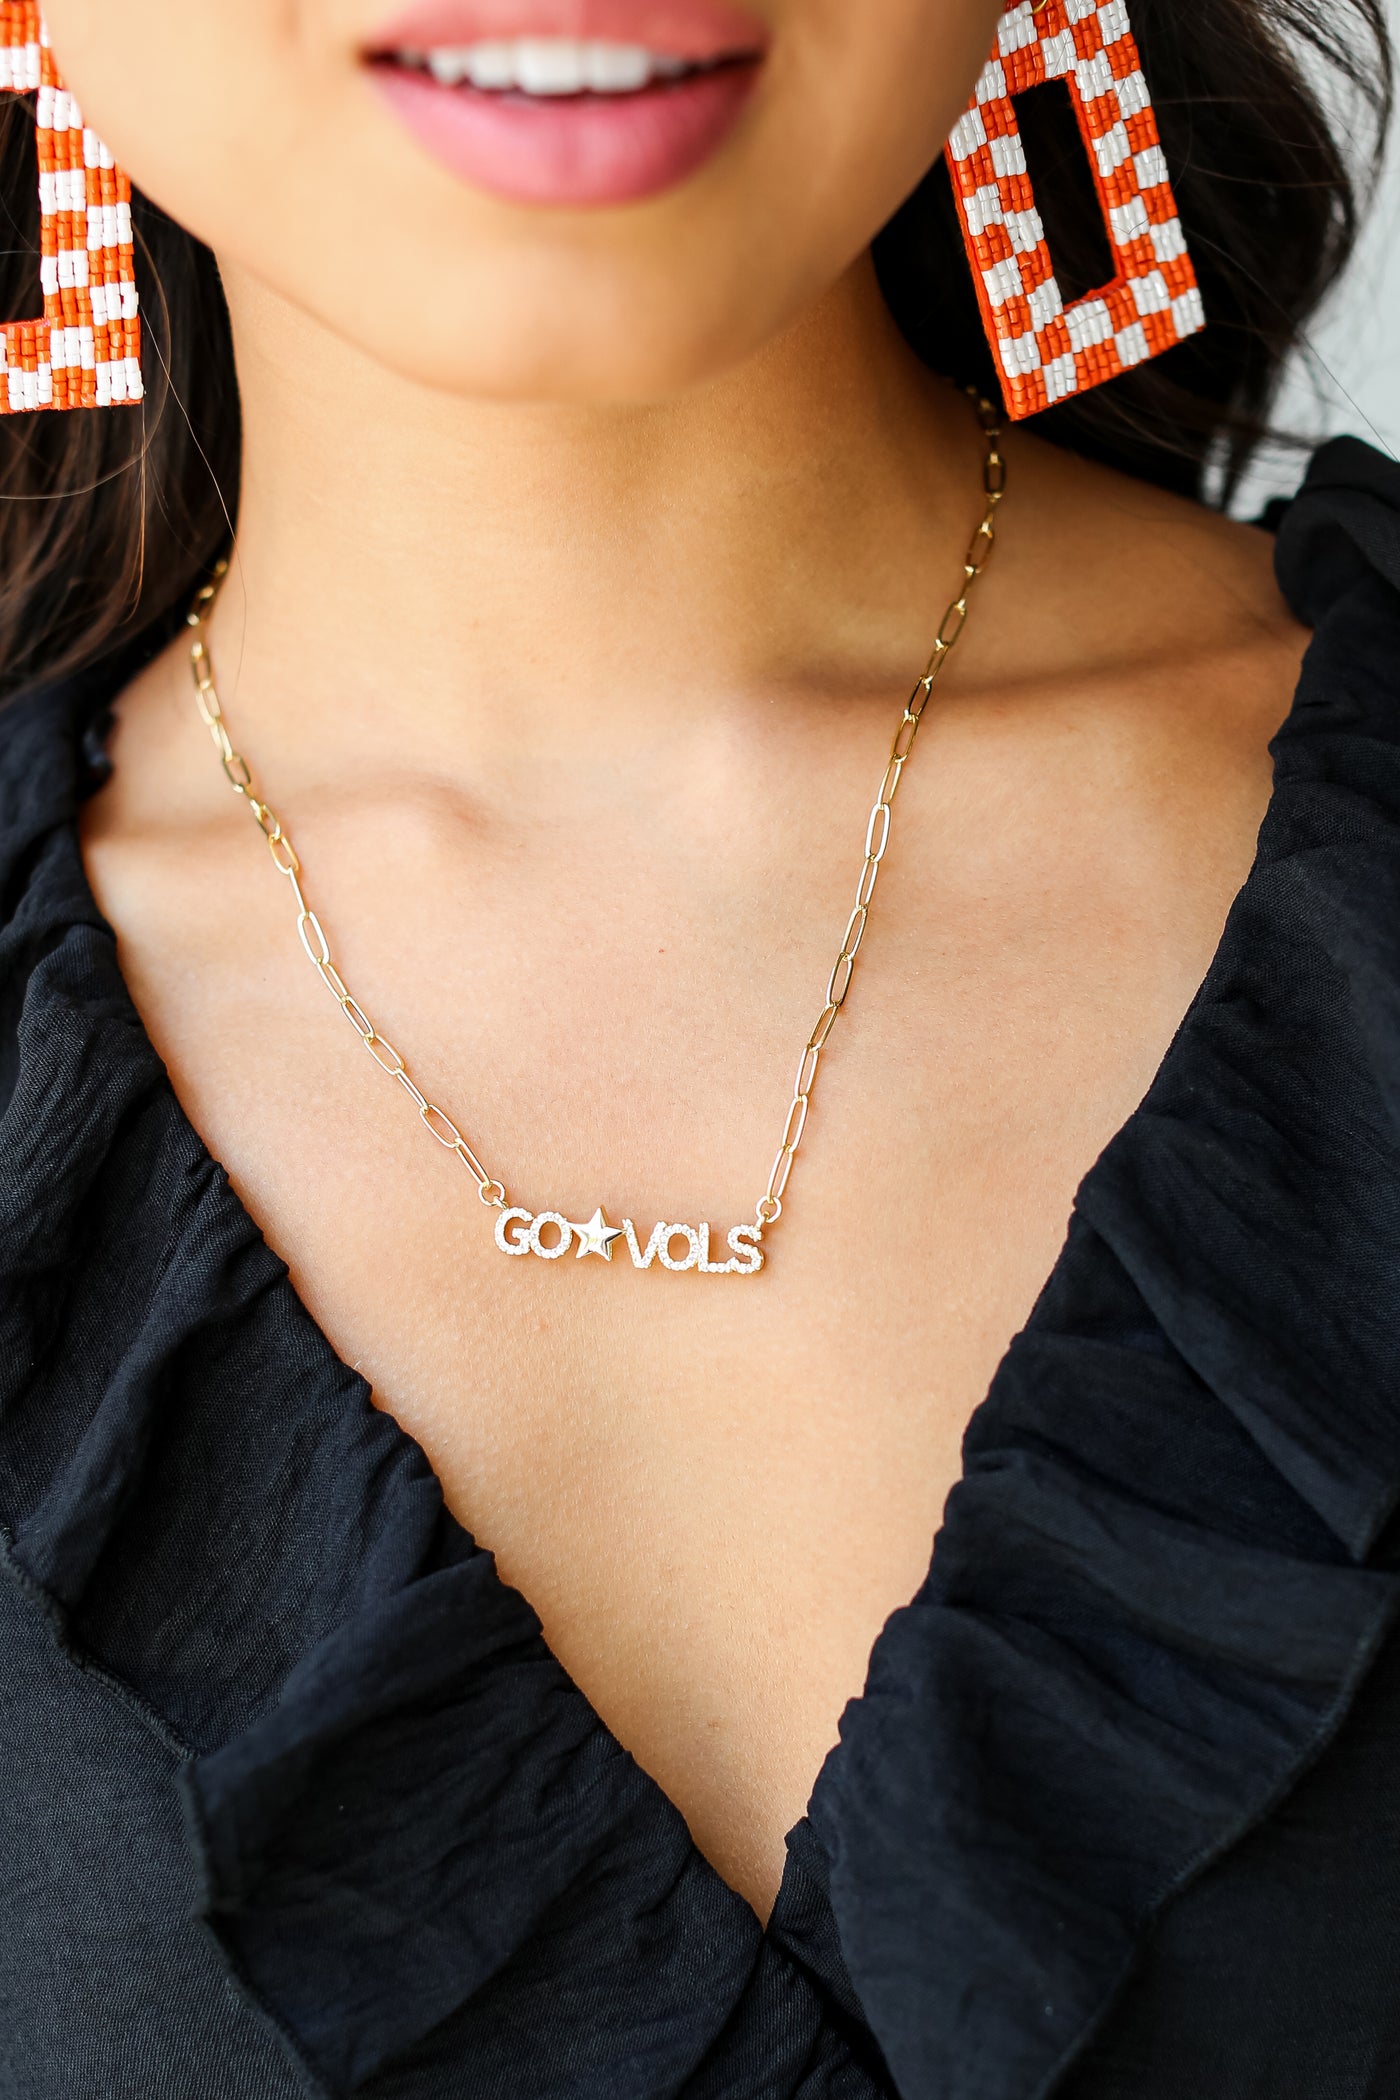 Gold Go Vols Necklace close up